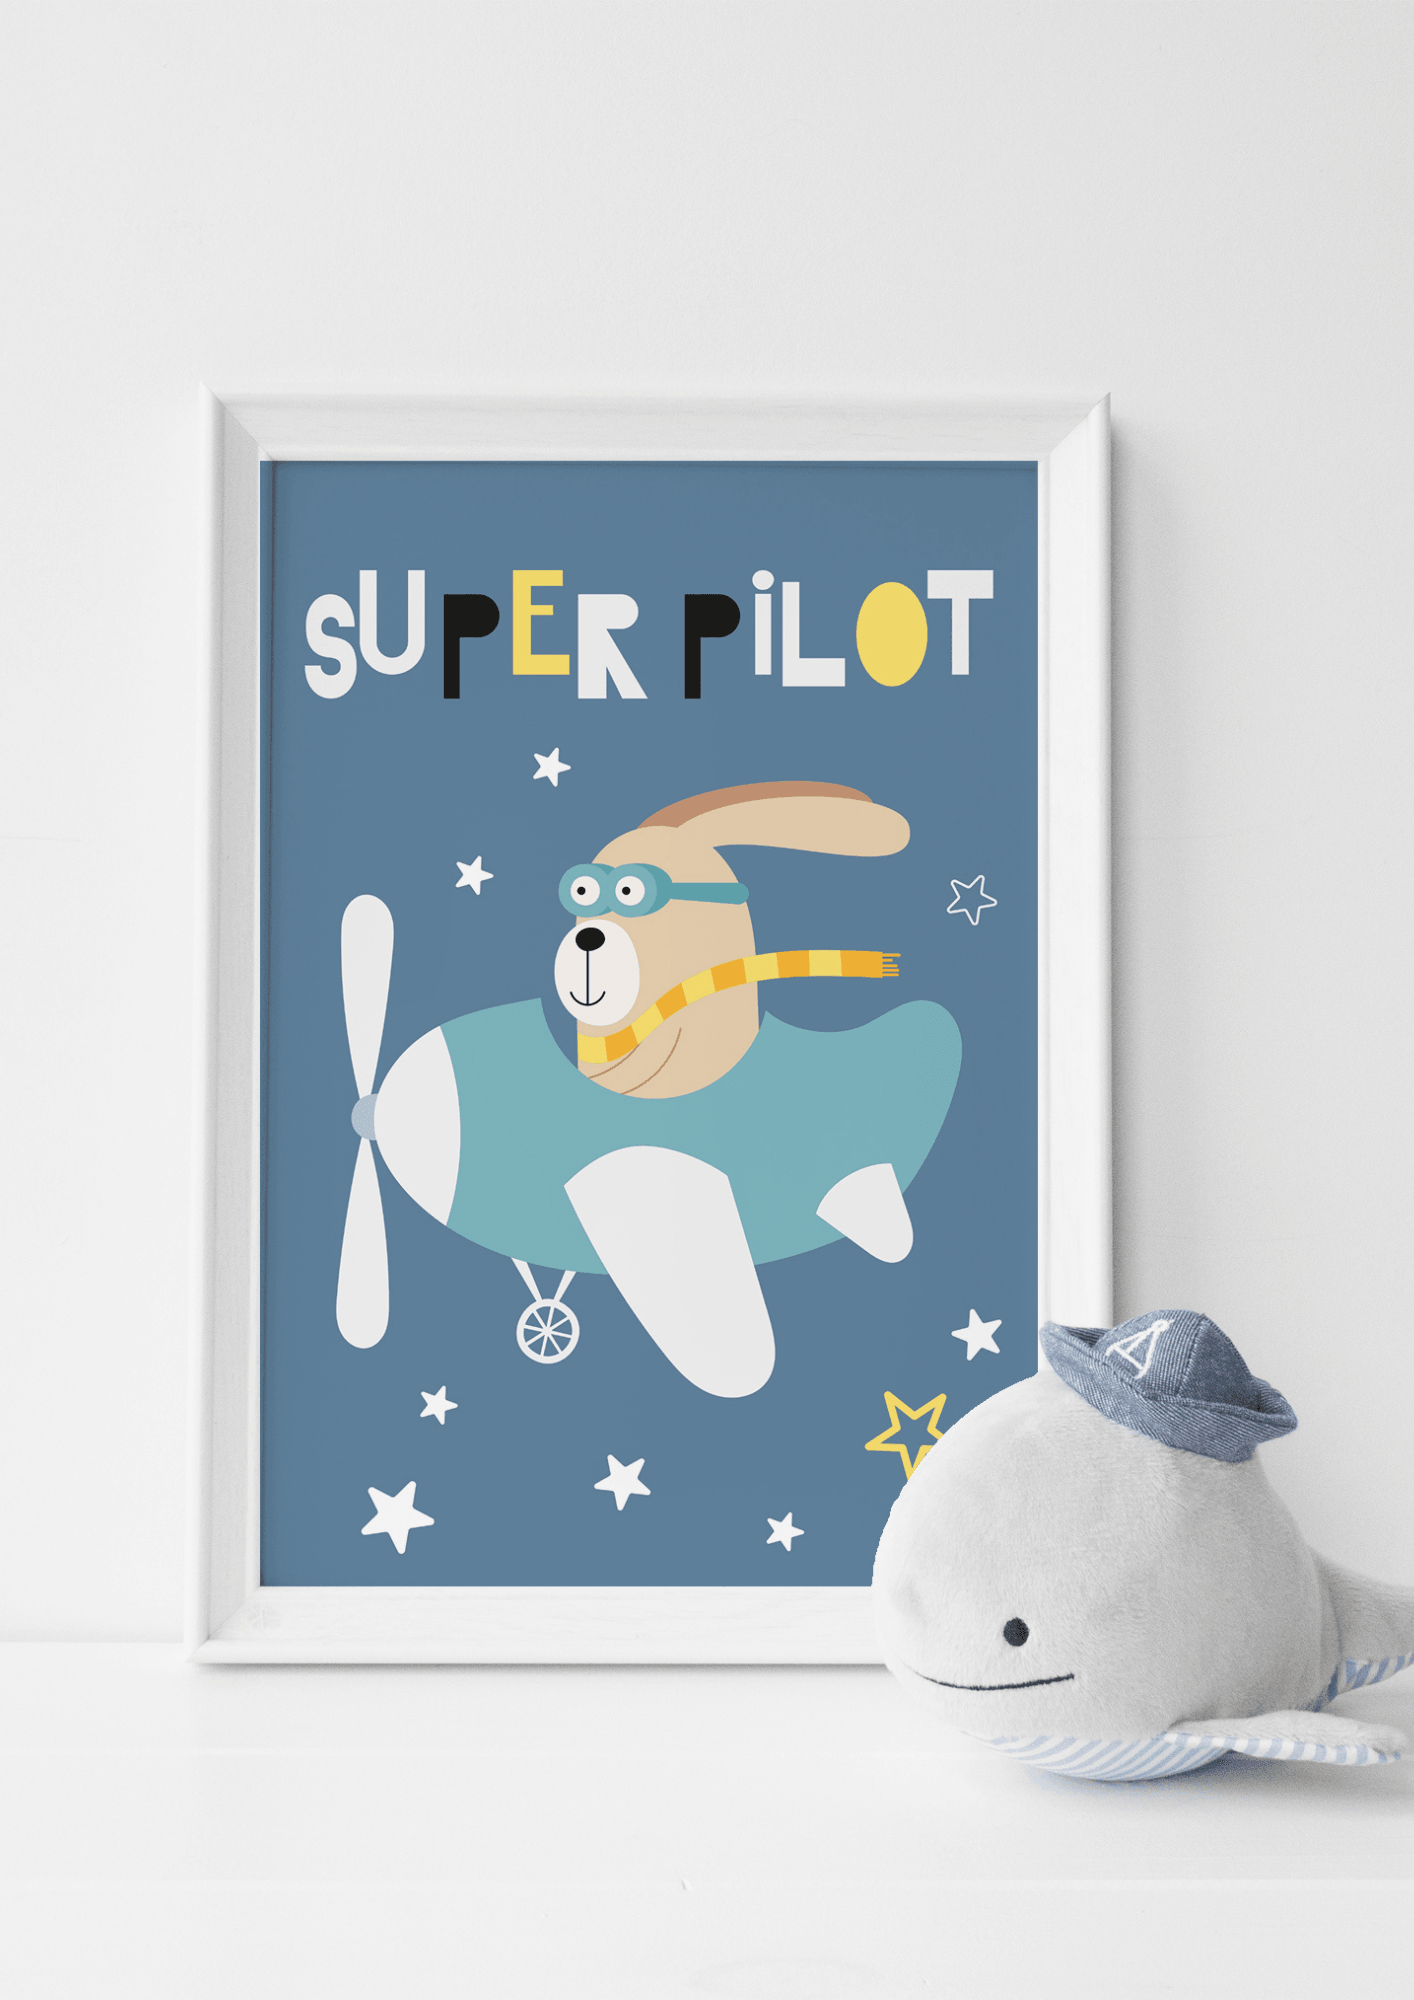 Super Pilot - The Ditzy Dodo